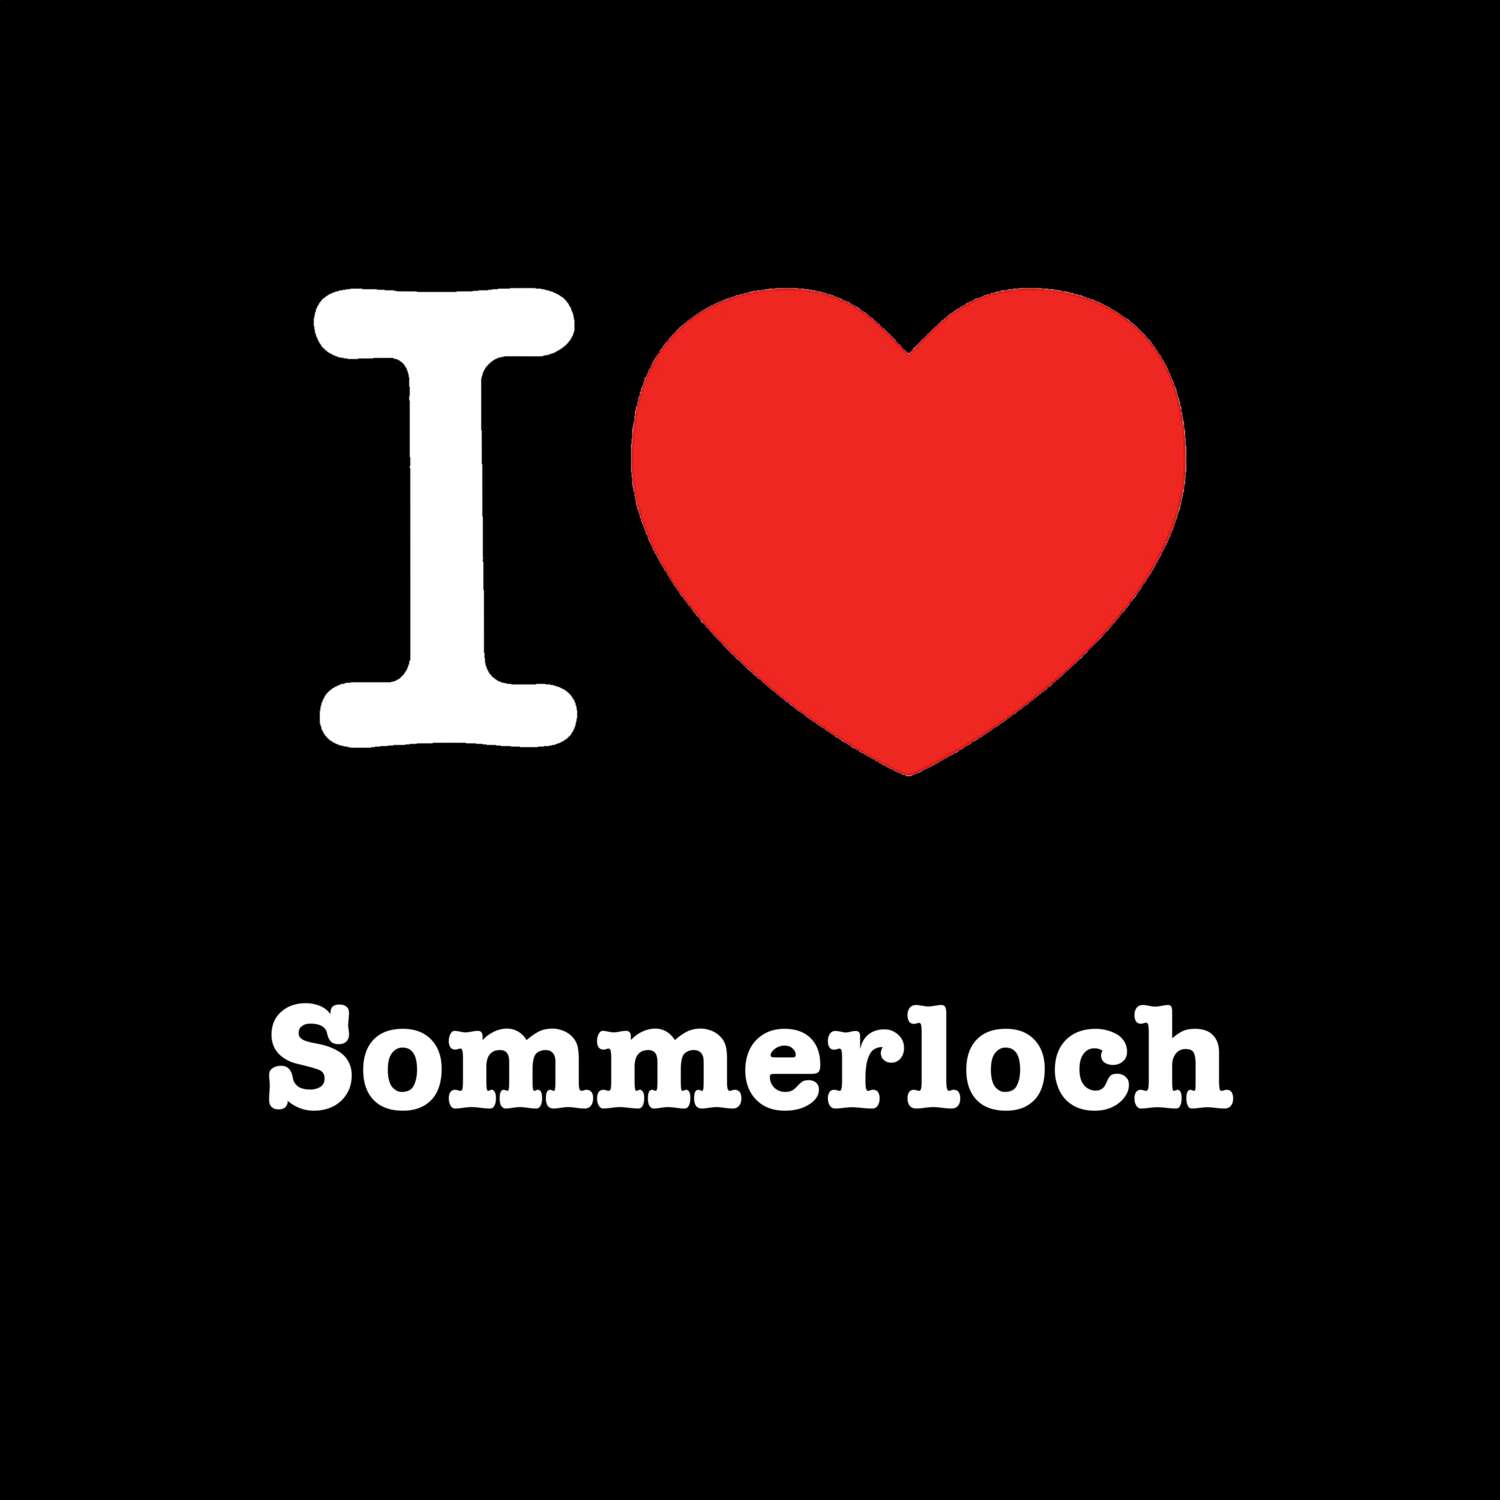 Sommerloch T-Shirt »I love«